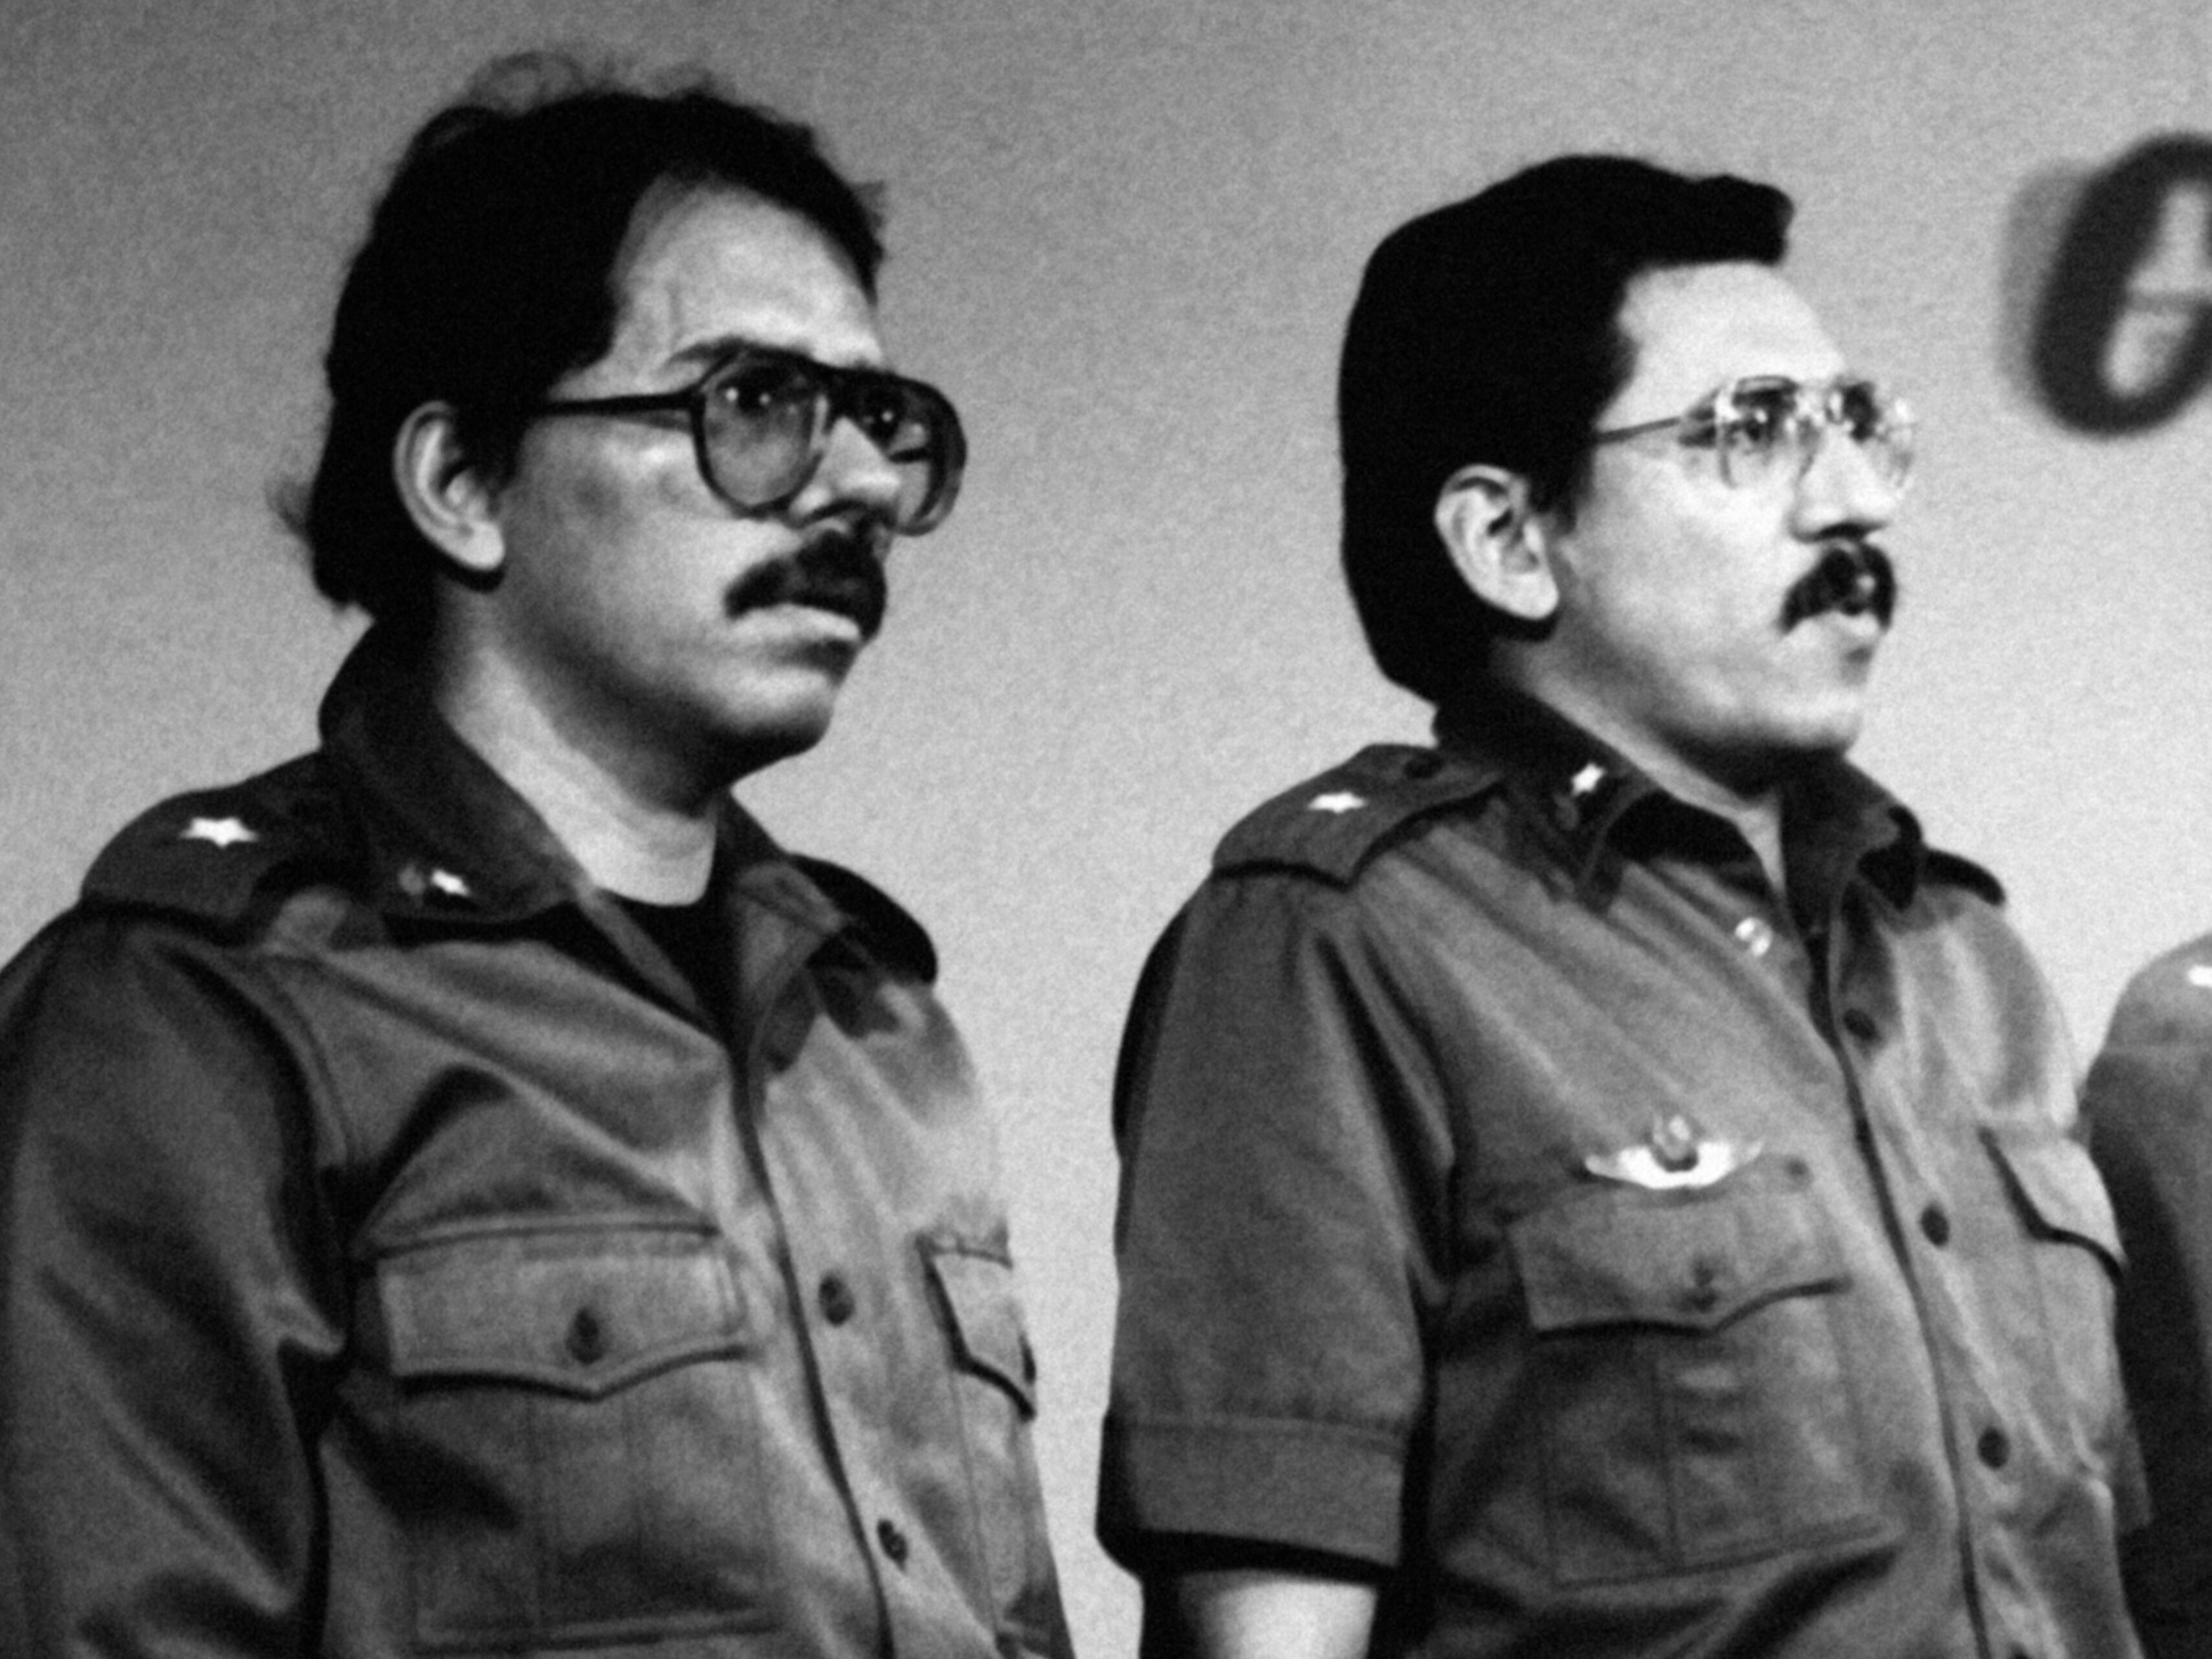 Daniel Ortega and Humberto Ortega, during an appearance in Nicaragua, in 1984.